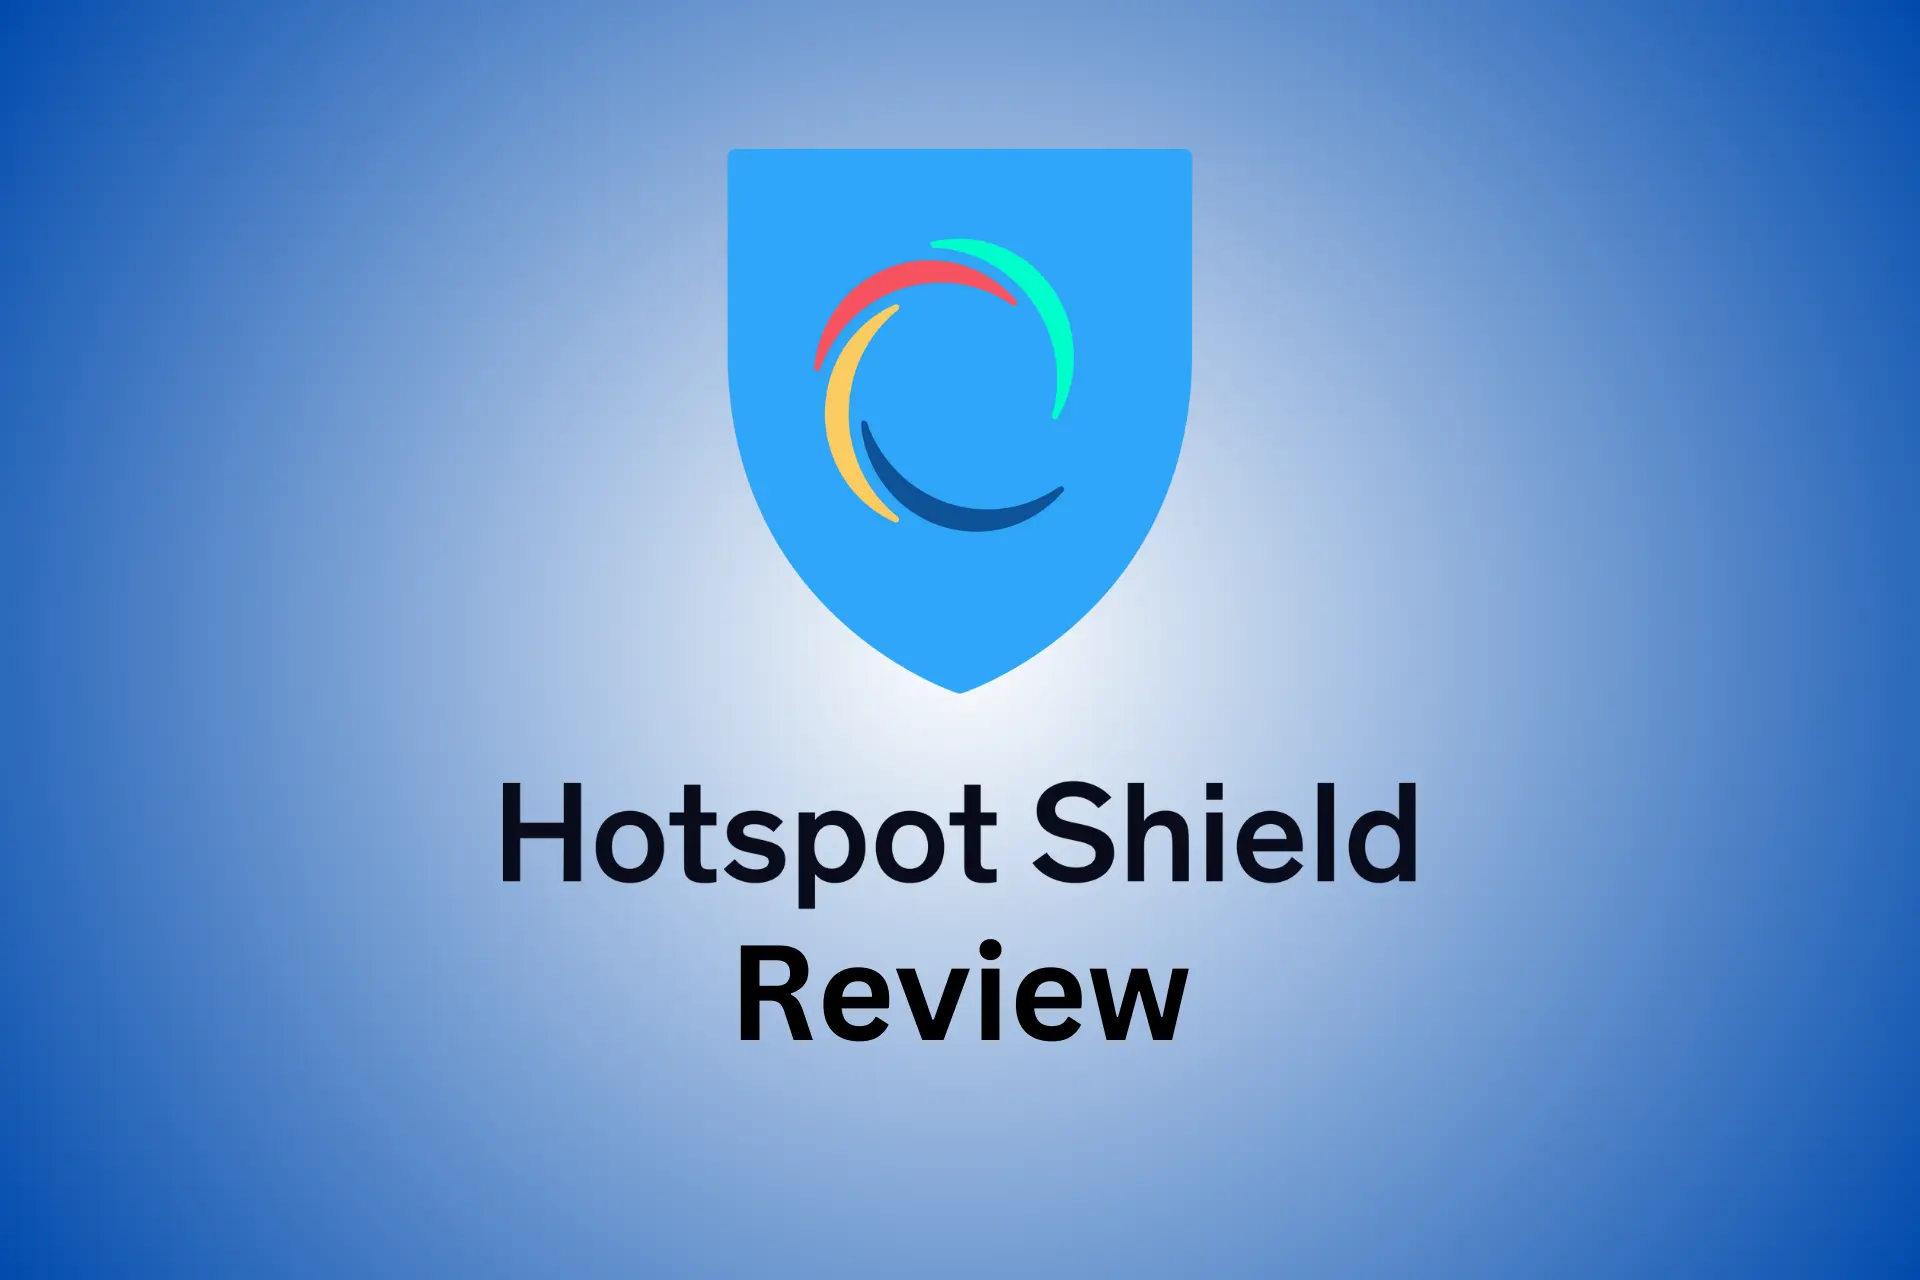 hotspot shield review